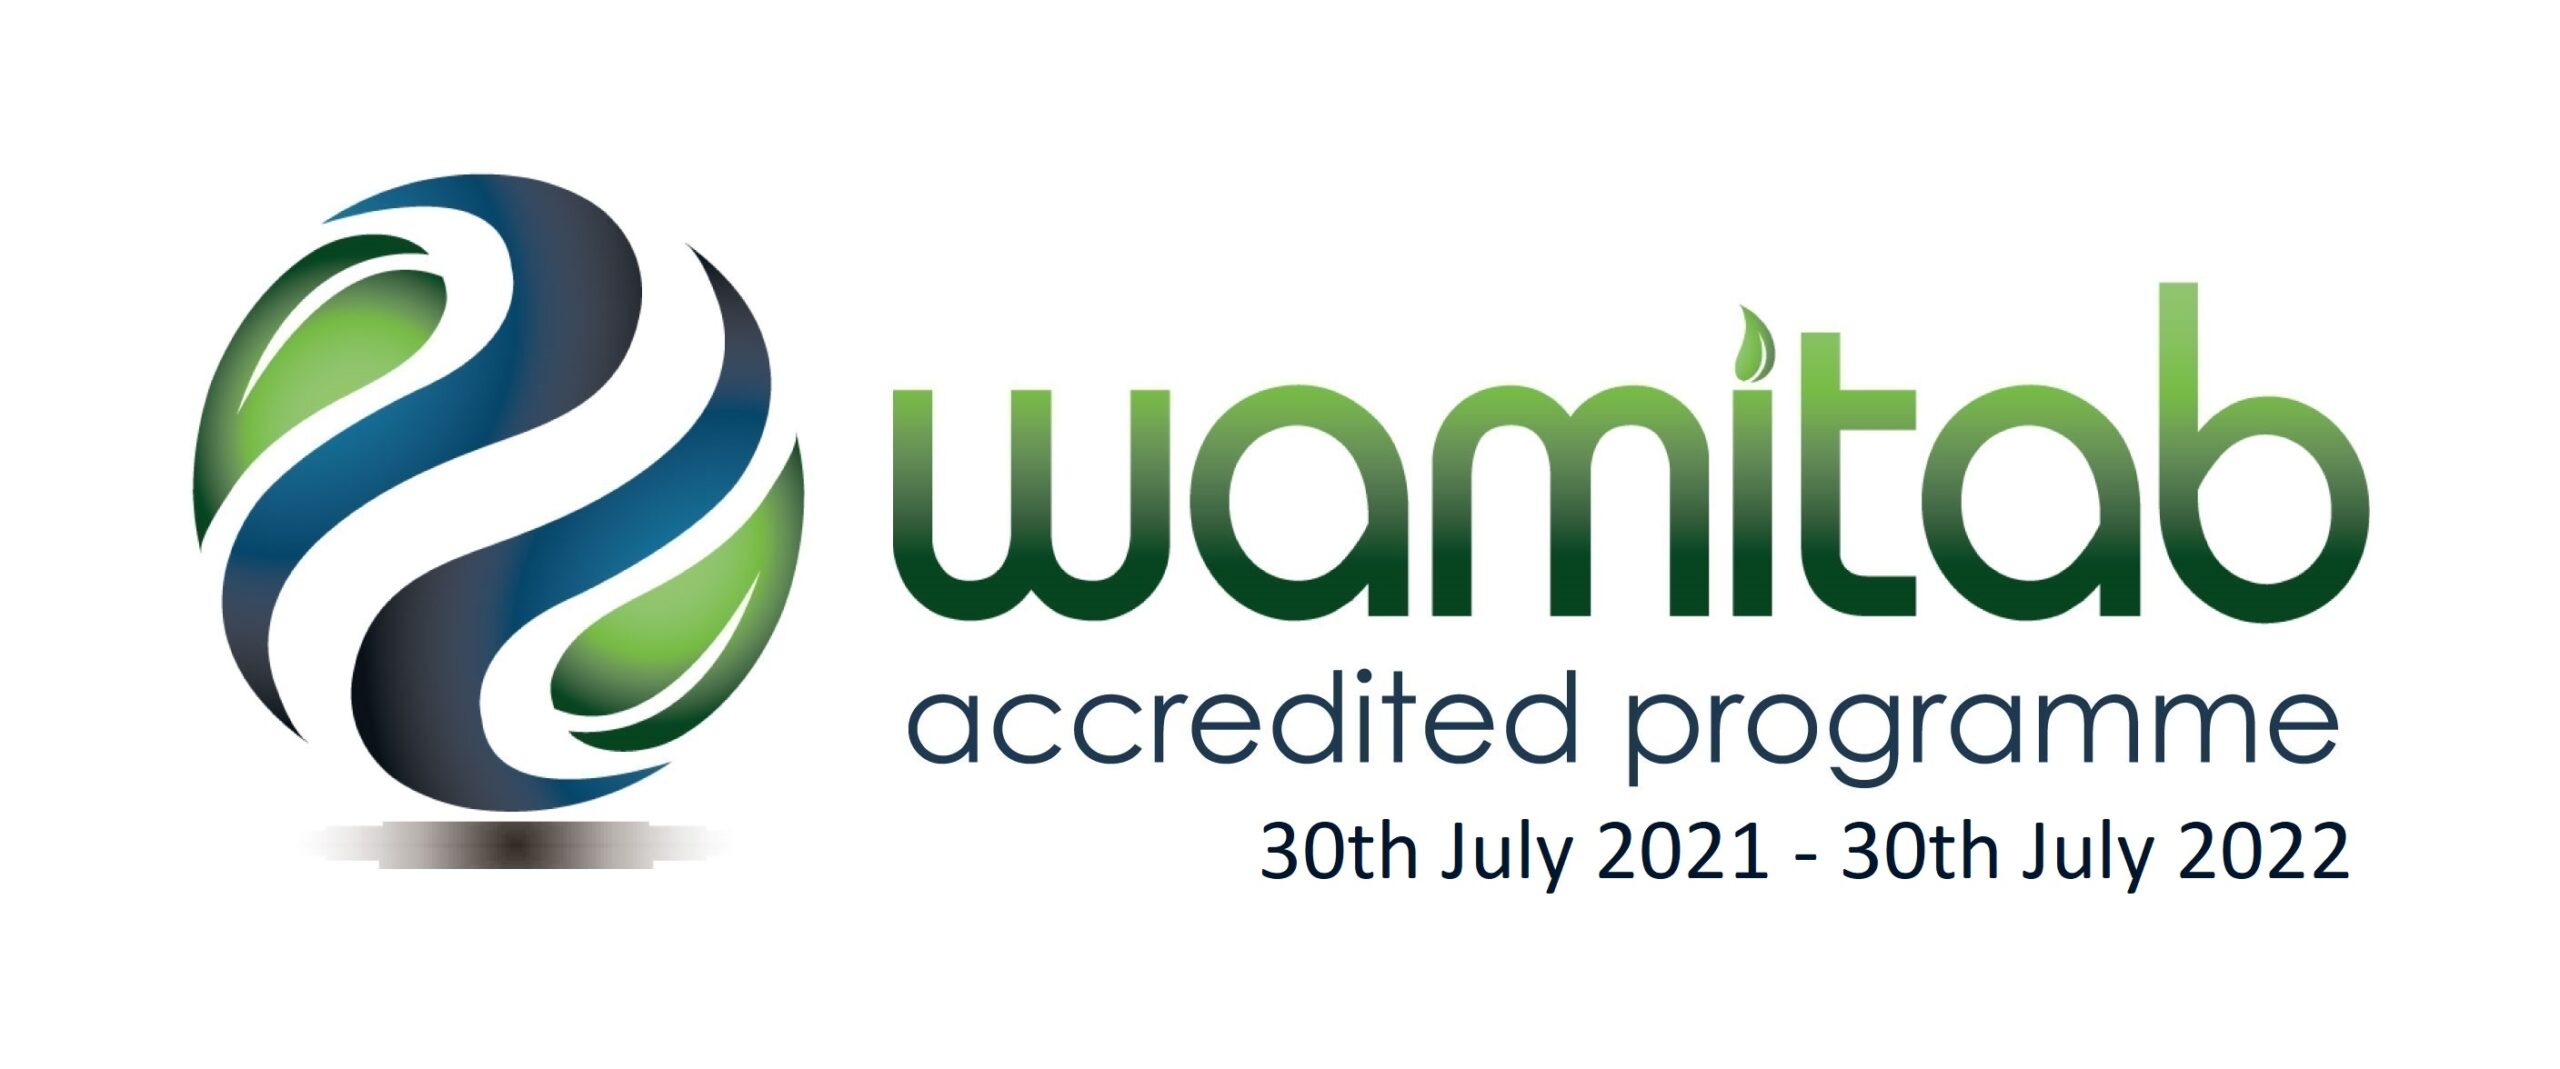 Wamitab accredited logo 2021-2022